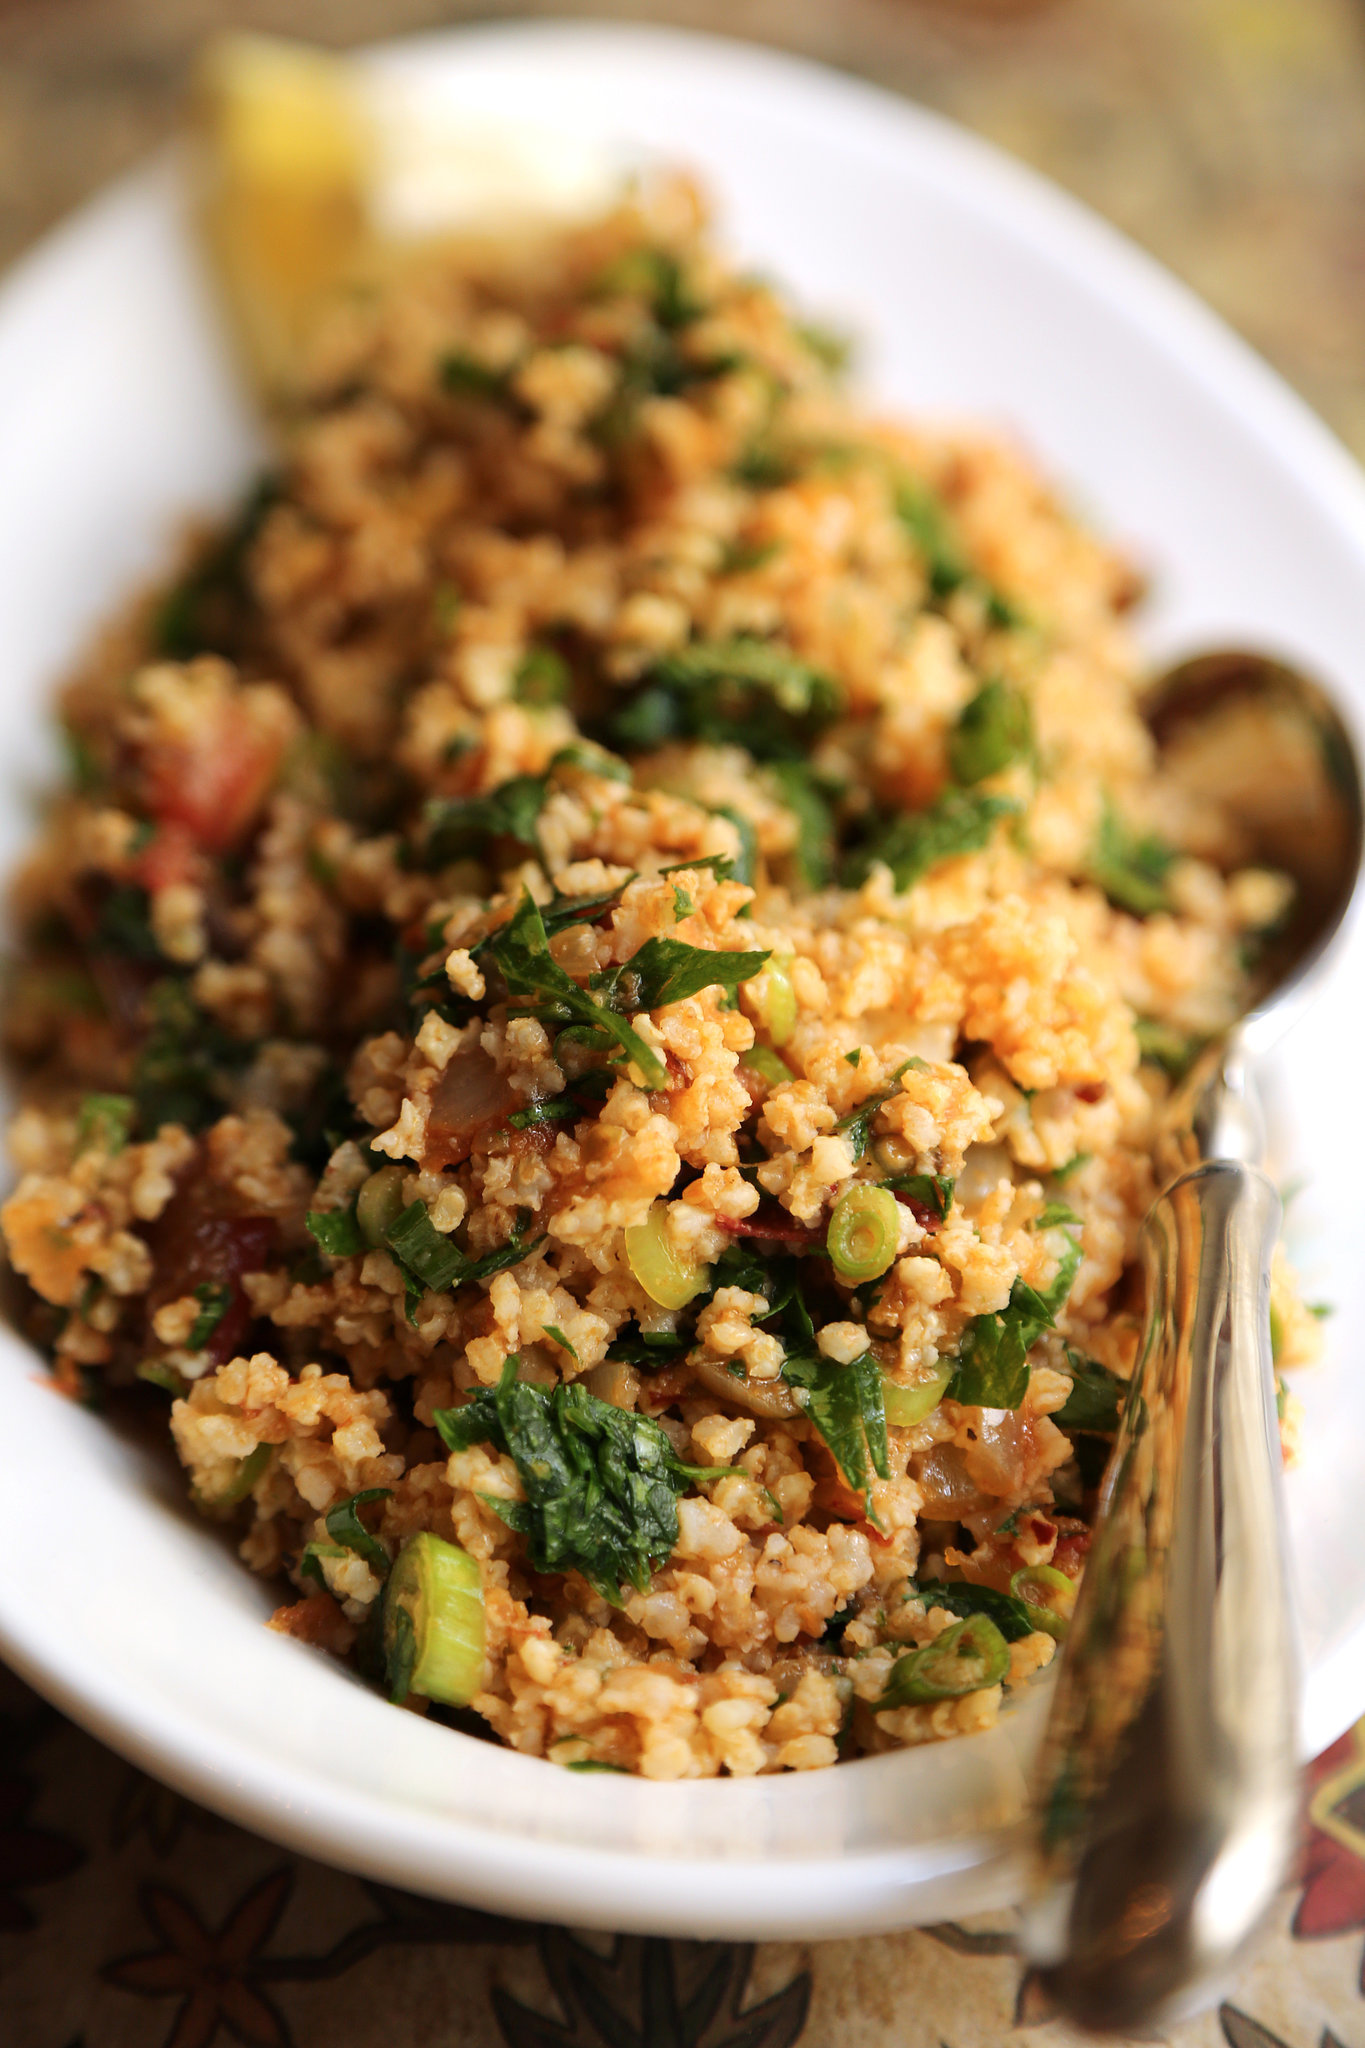 Fast, Easy, Healthy Recipe For Quinoa Tabbouleh | POPSUGAR Food